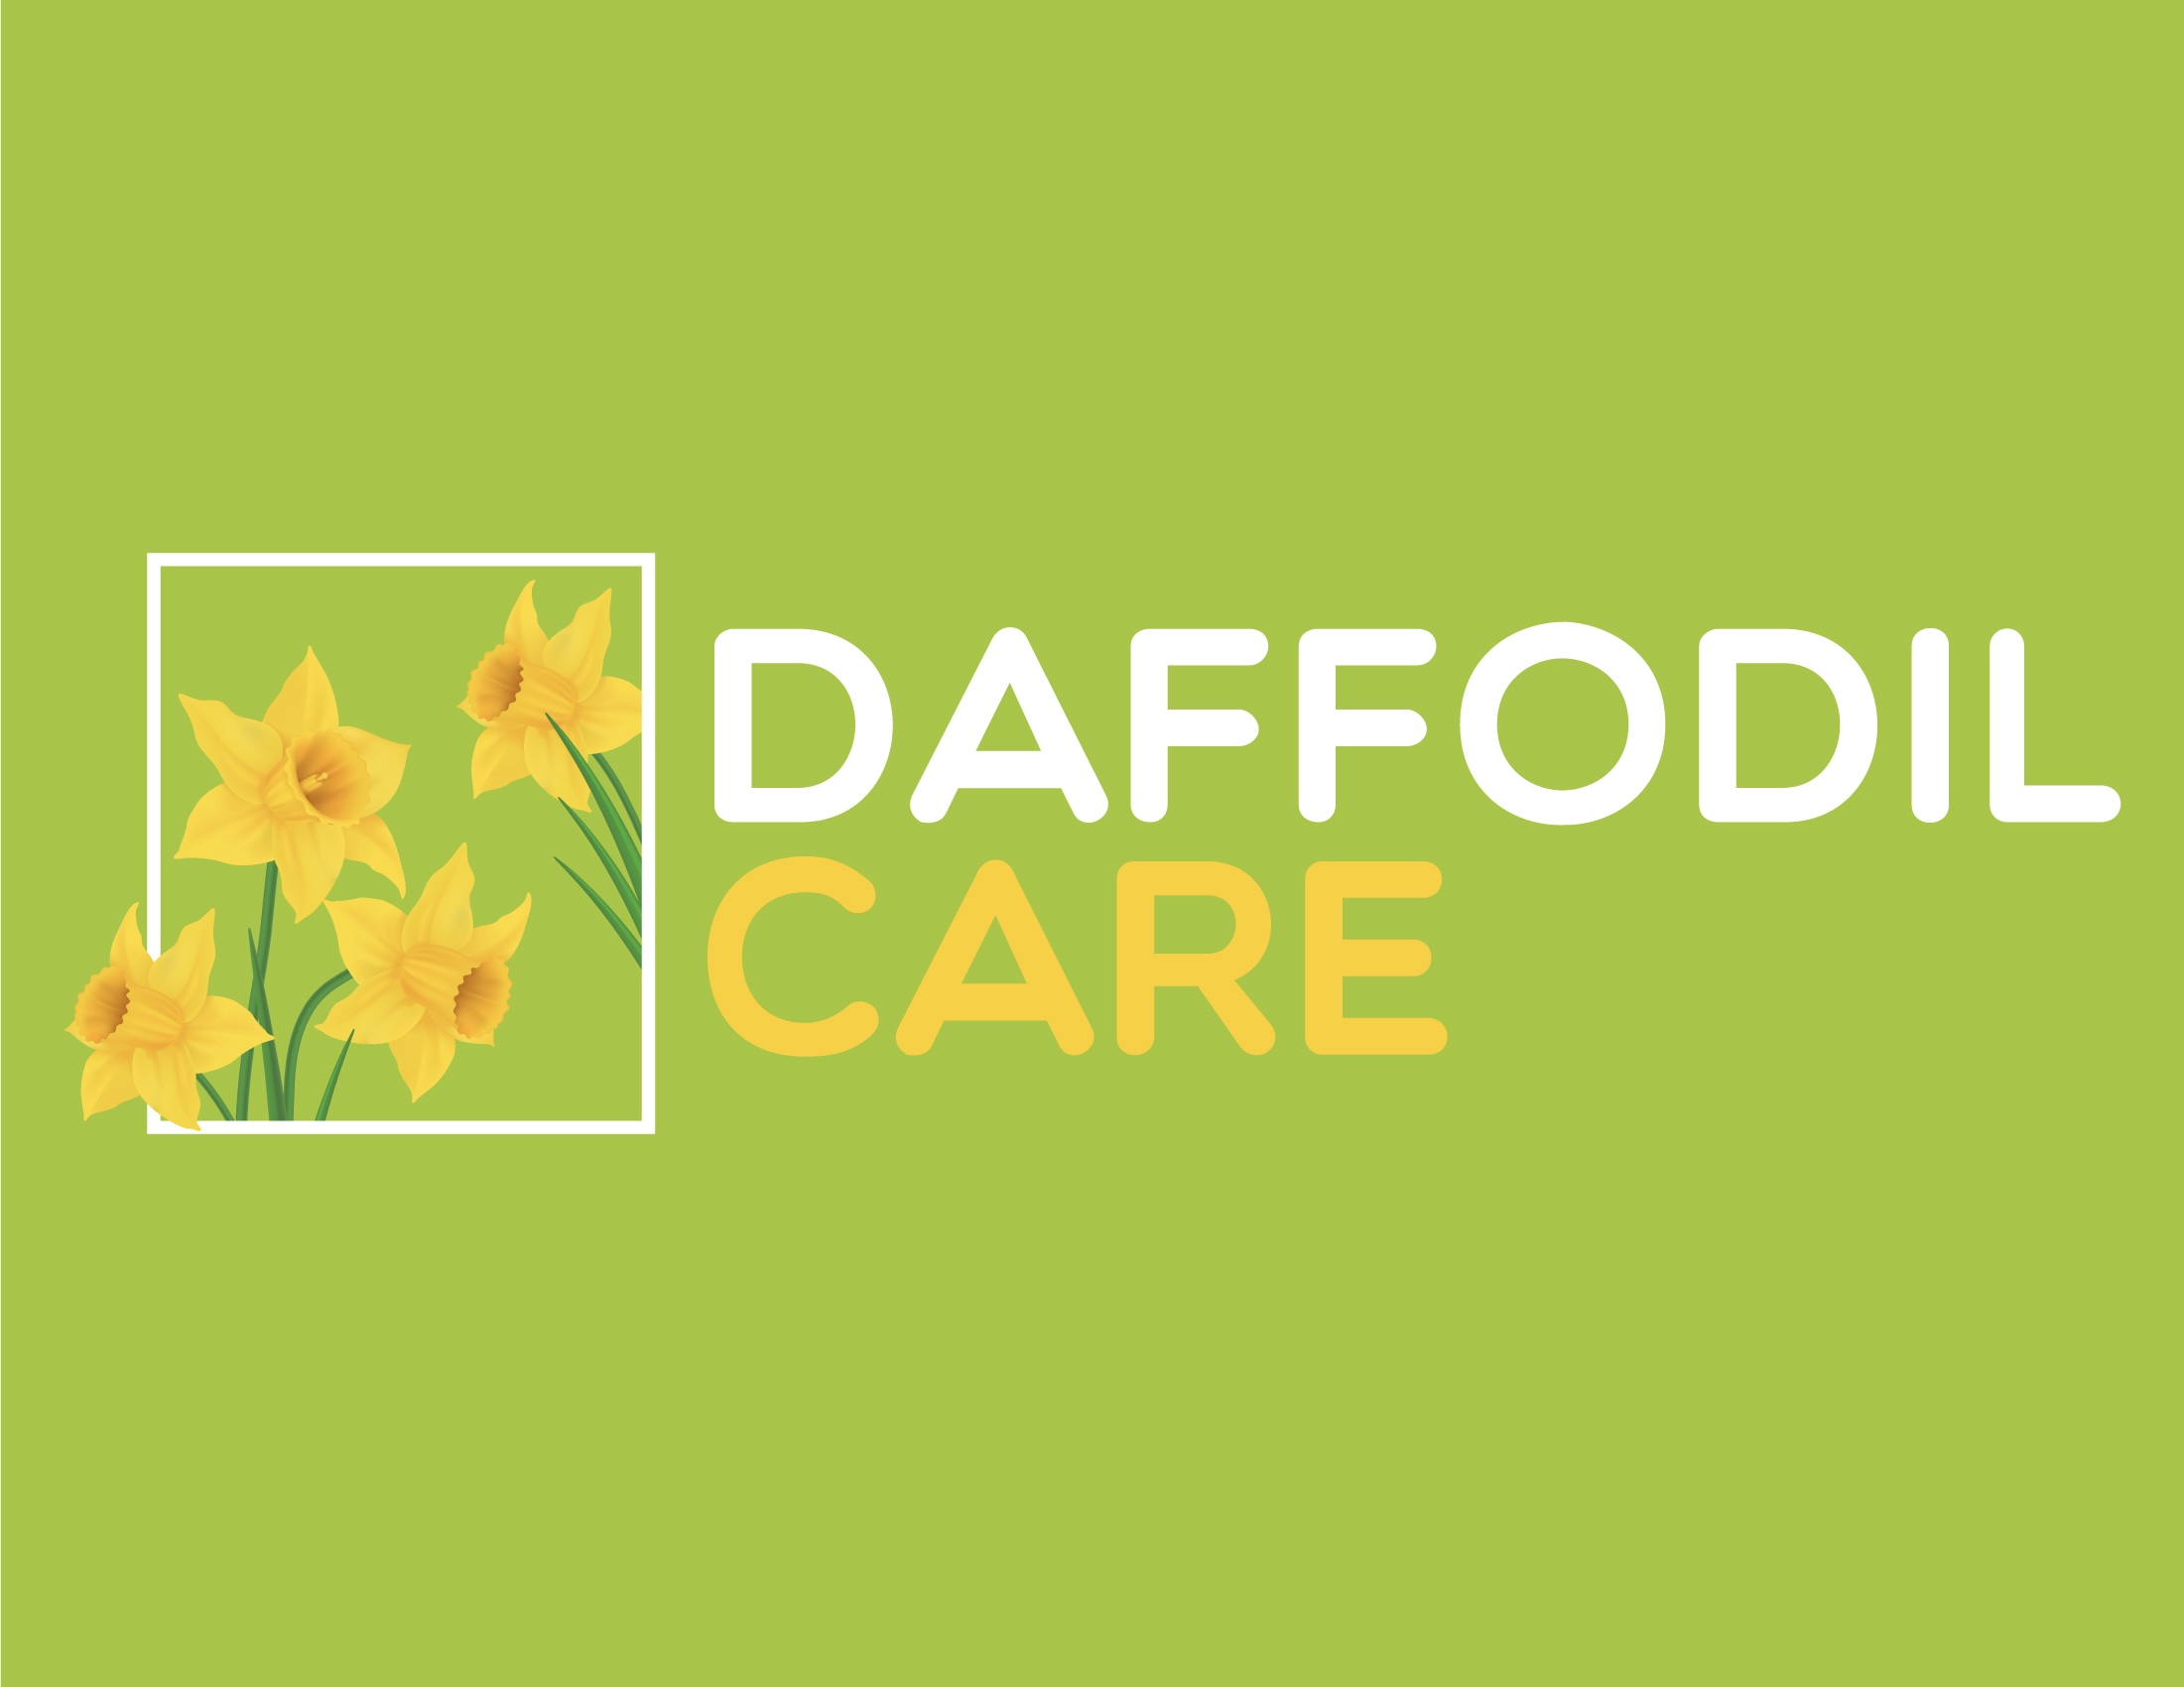 At Daffodil we care